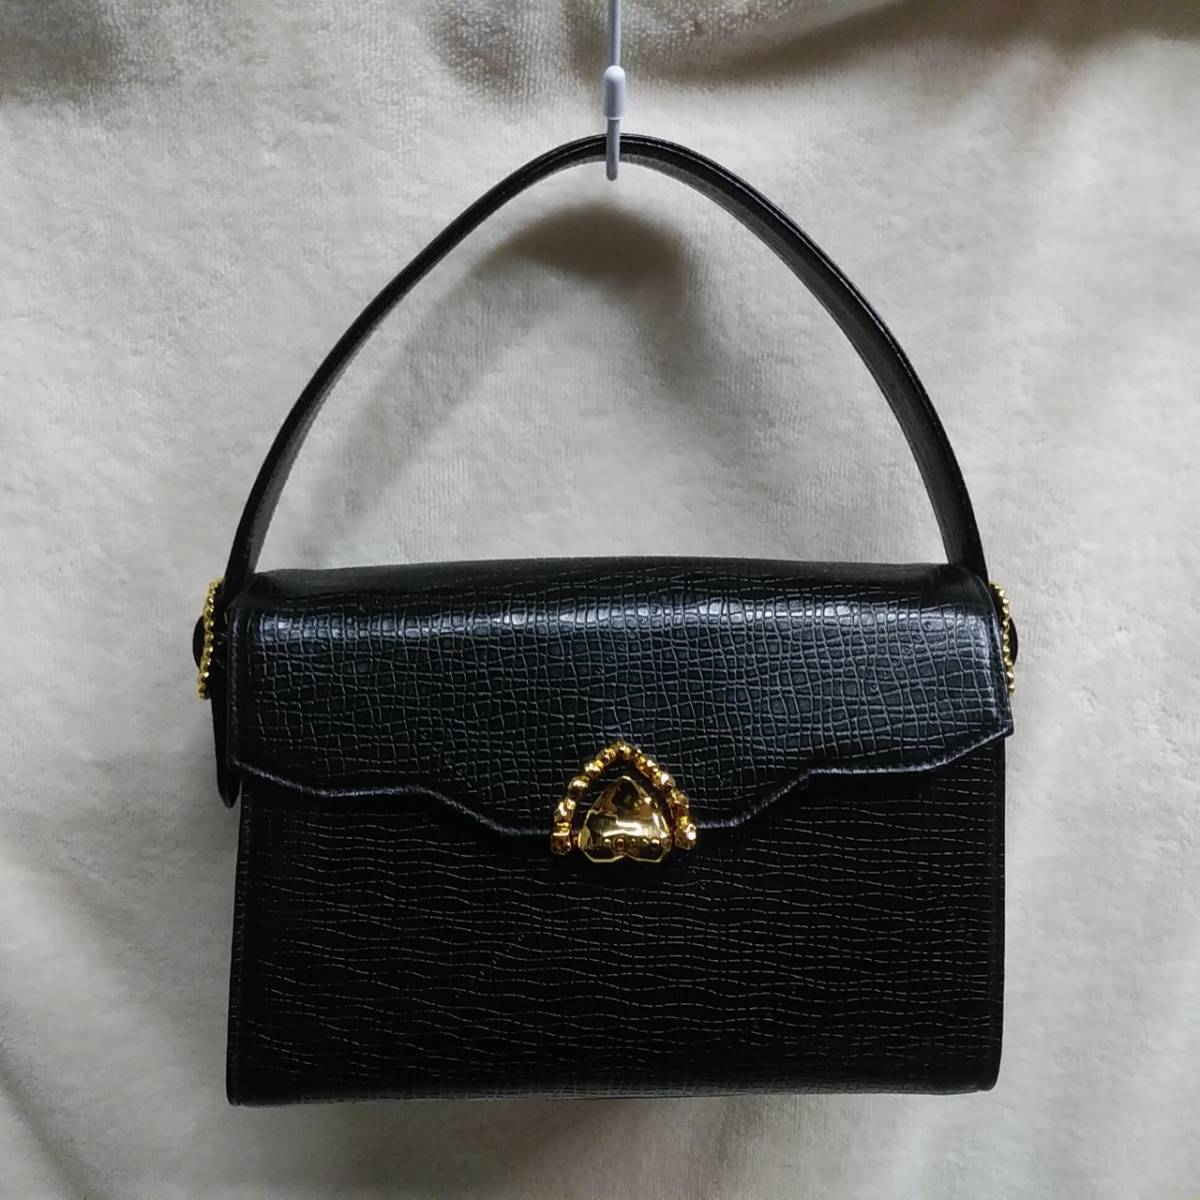 ungaro 2way shoulder bag Ungaro handbag black series color metal fittings 